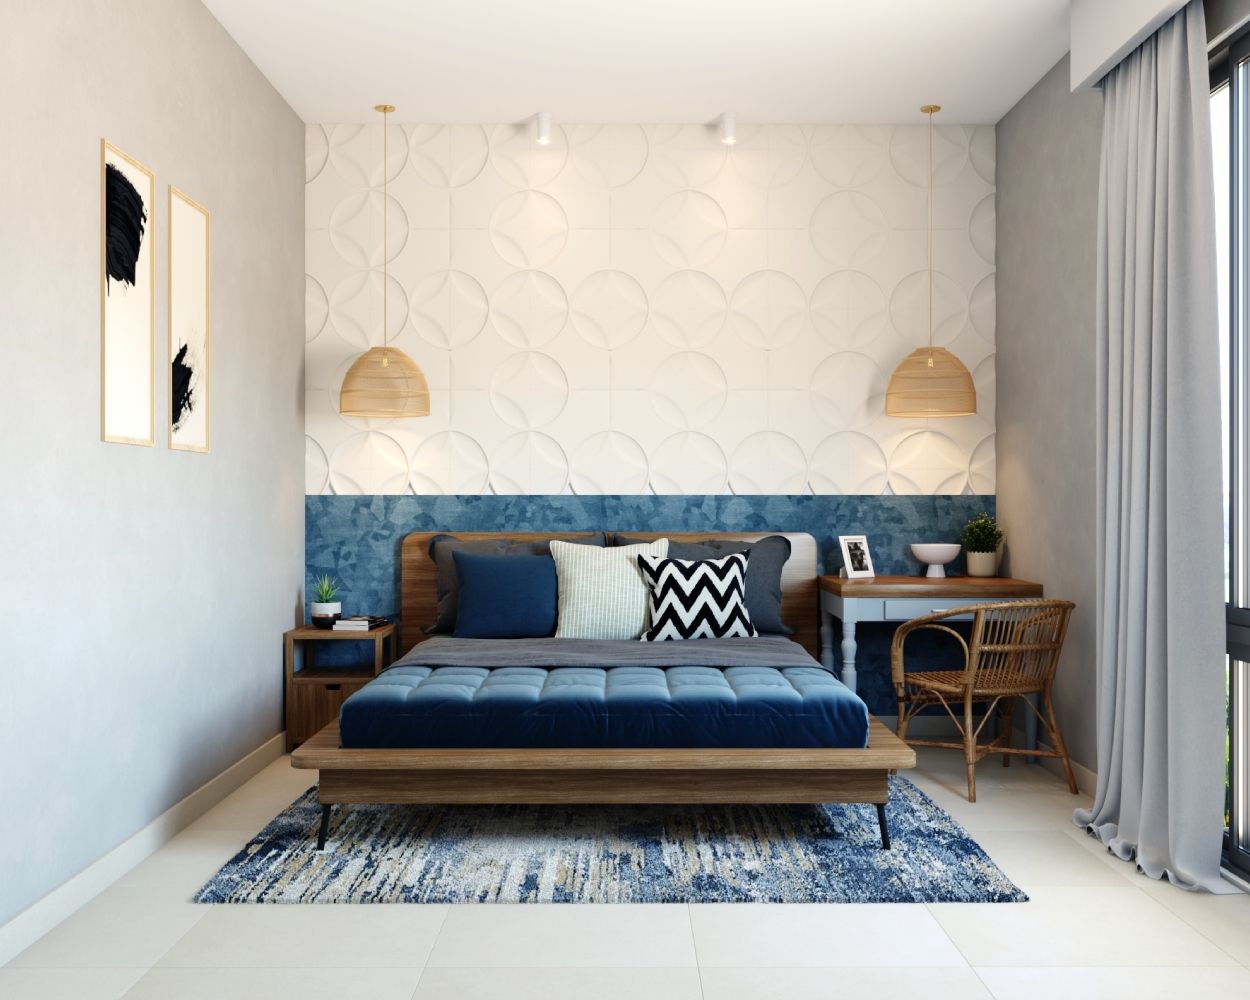 Modern Master Bedroom Design With Wooden Bed And Blue Velvet Upholstery